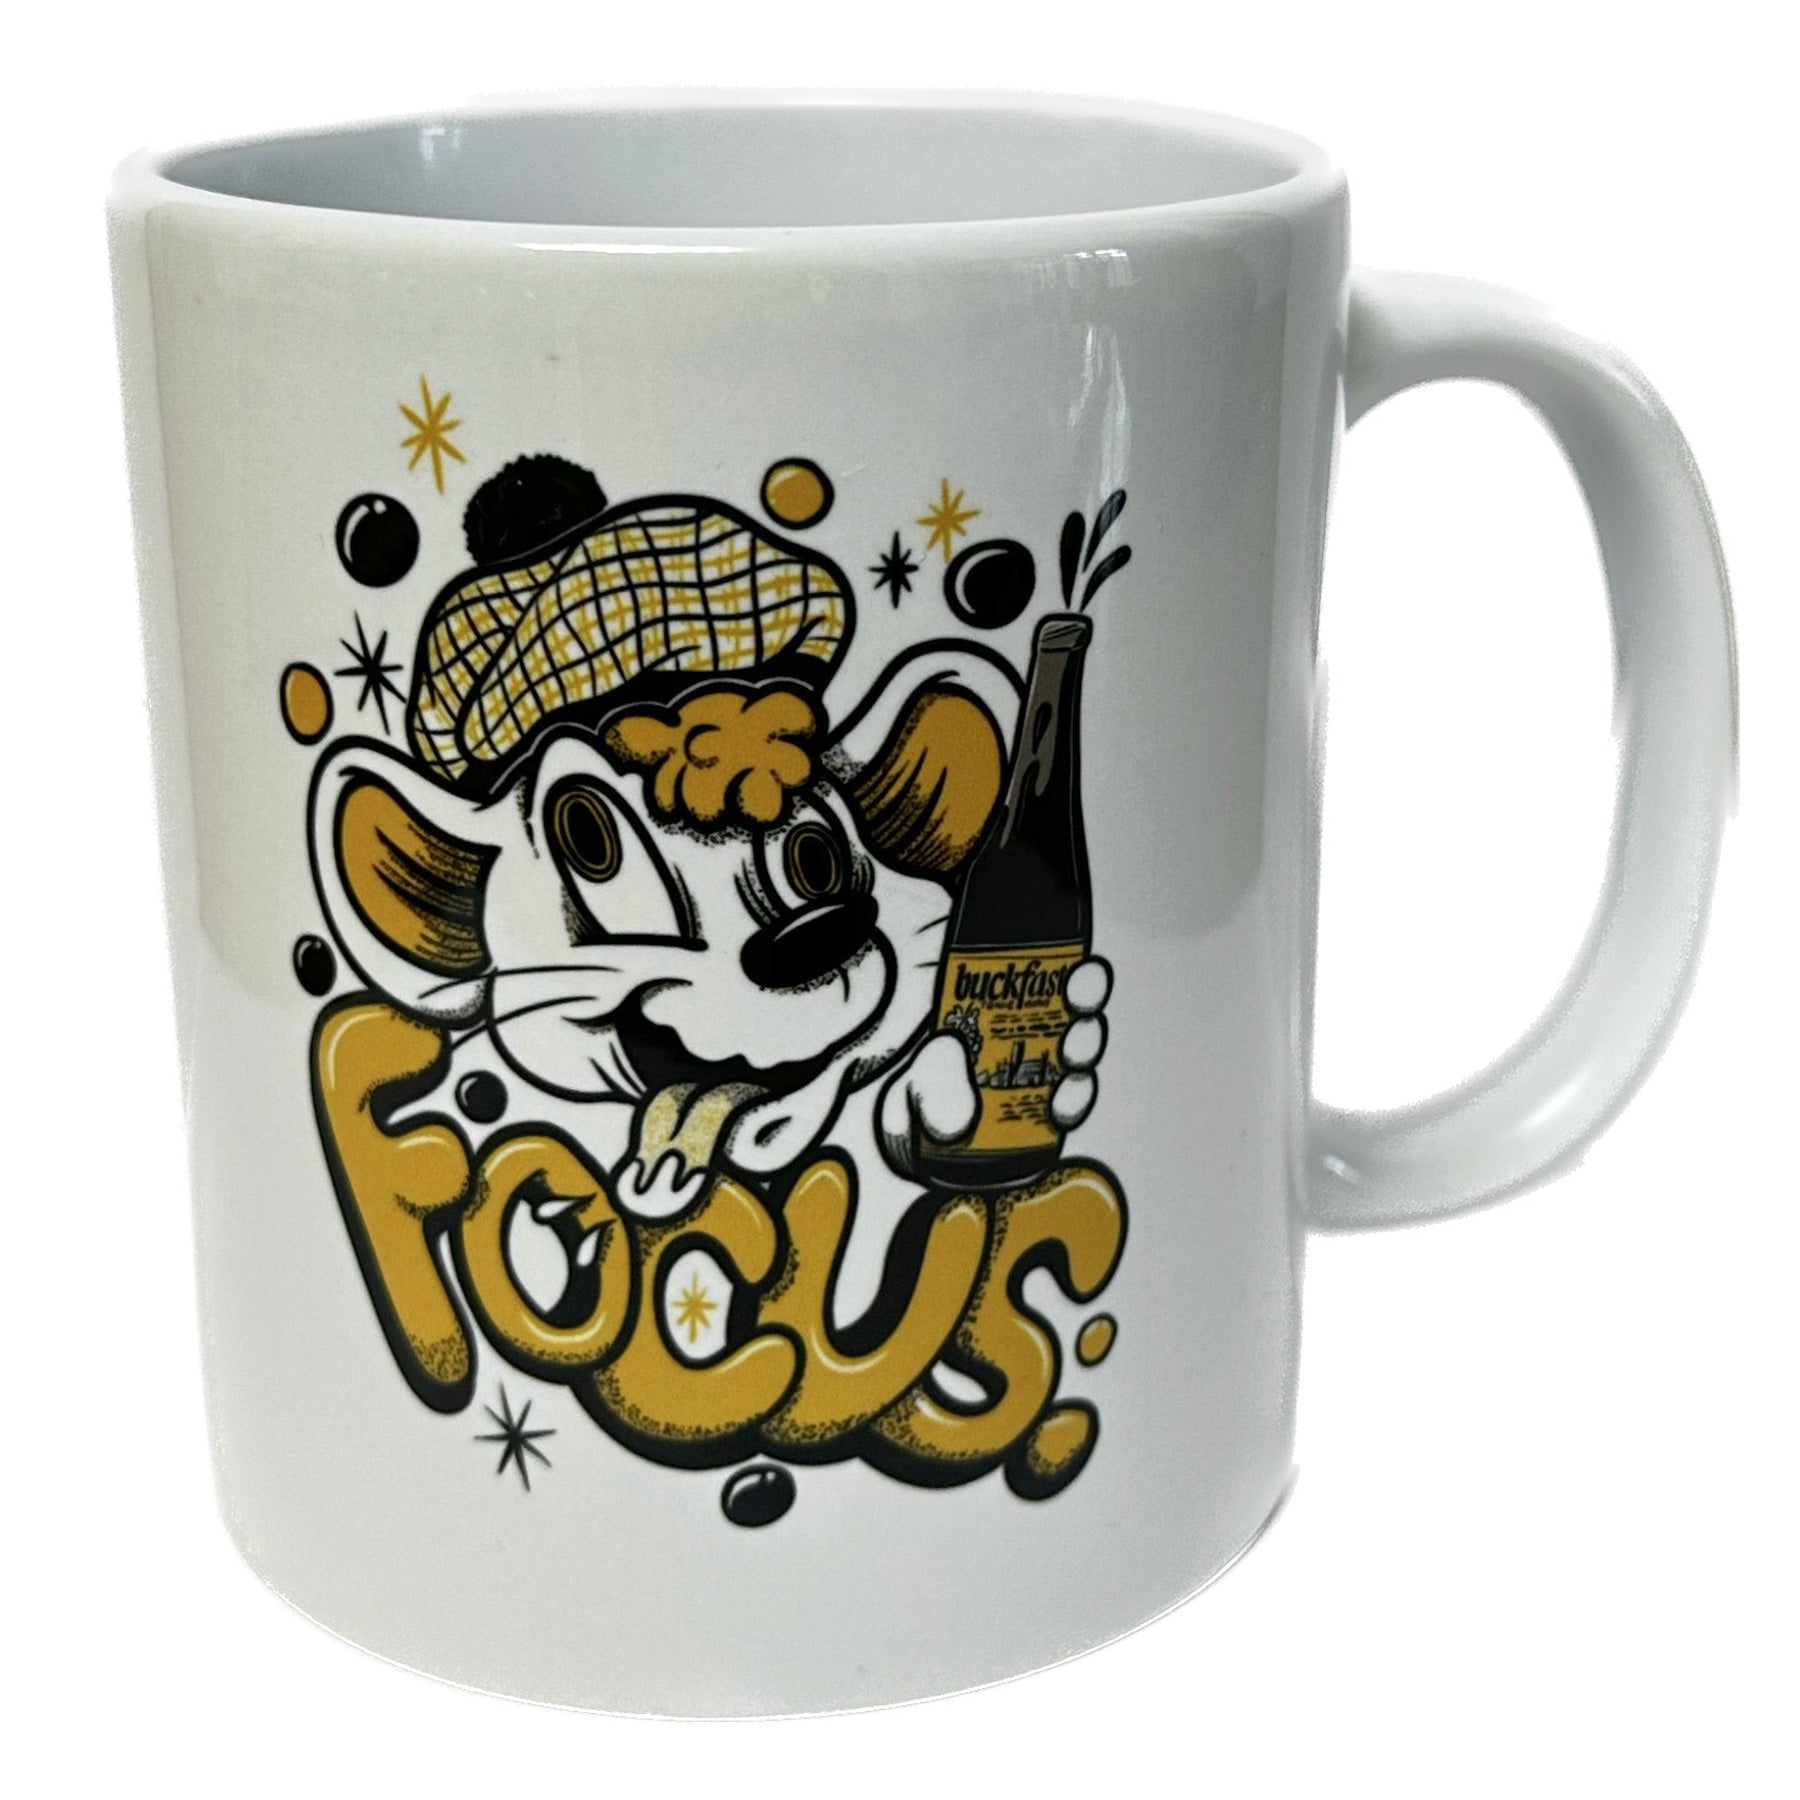 Focus Wreck The Hoose Moose Coffee Mug